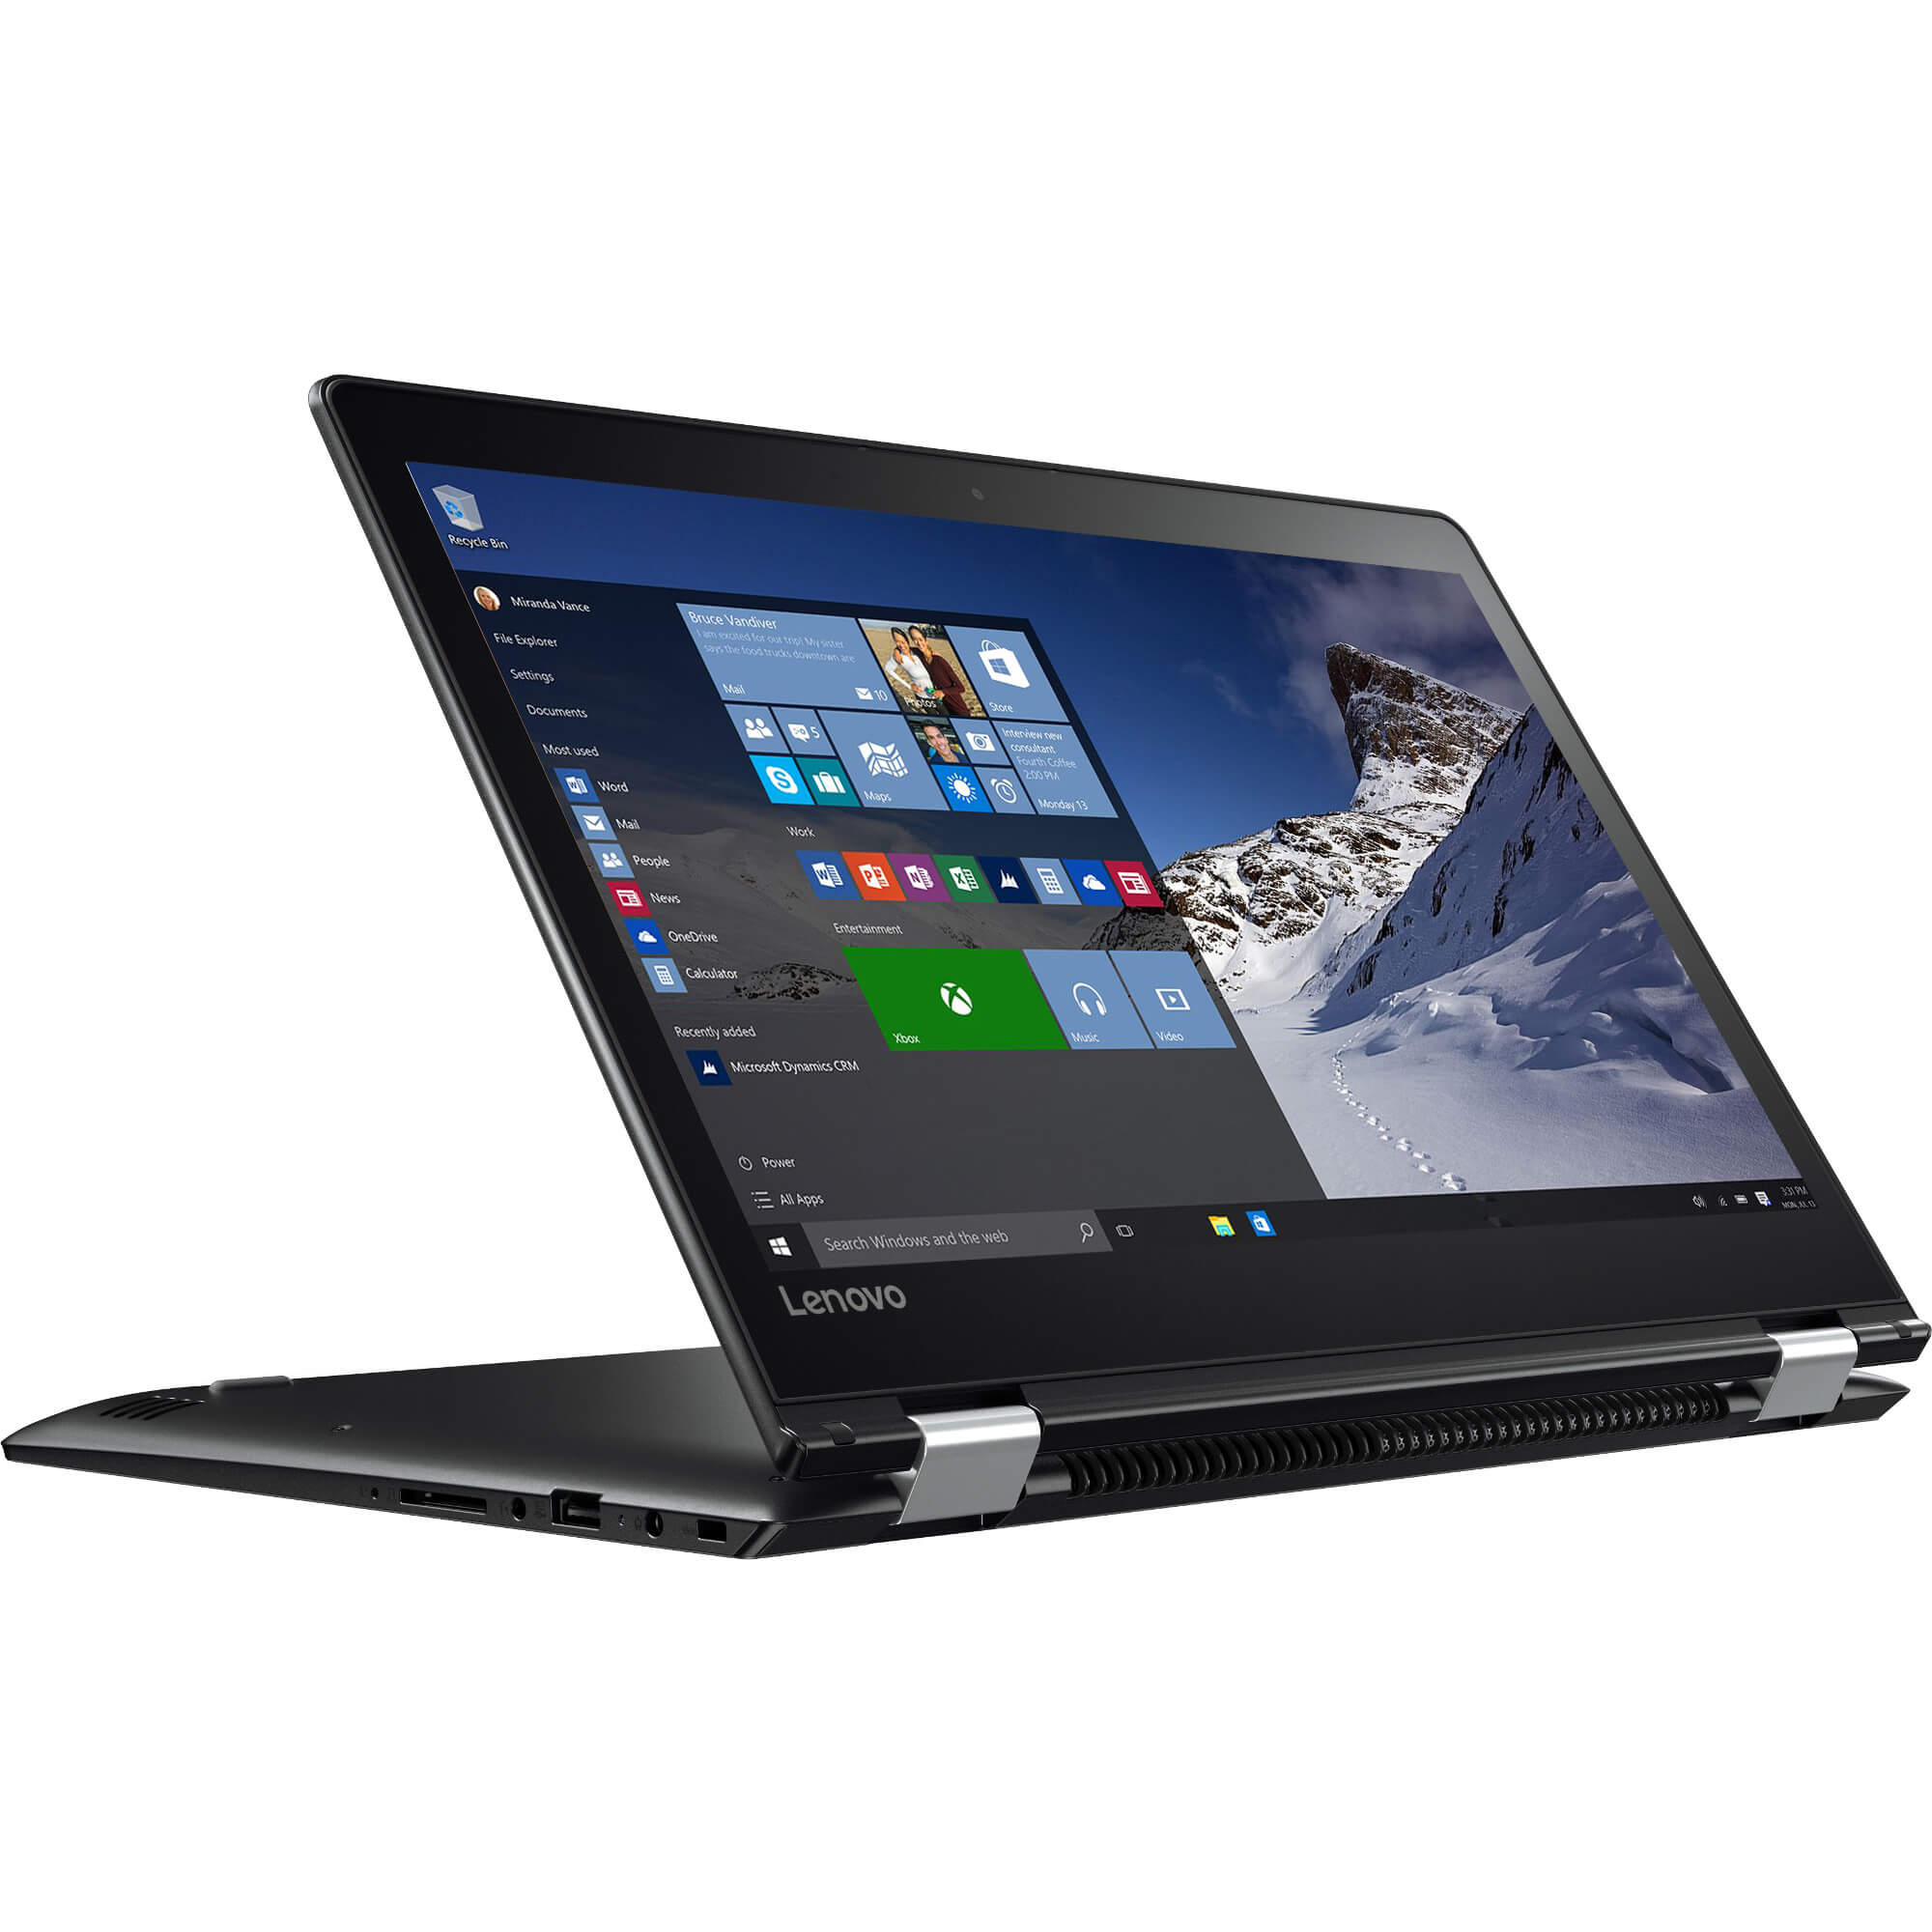  Laptop 2 in 1 Lenovo Yoga 510-15IKB, Intel Core i3-7100U, 4GB DDR4, HDD 1TB, Intel HD Graphics, Windows 10 Home 